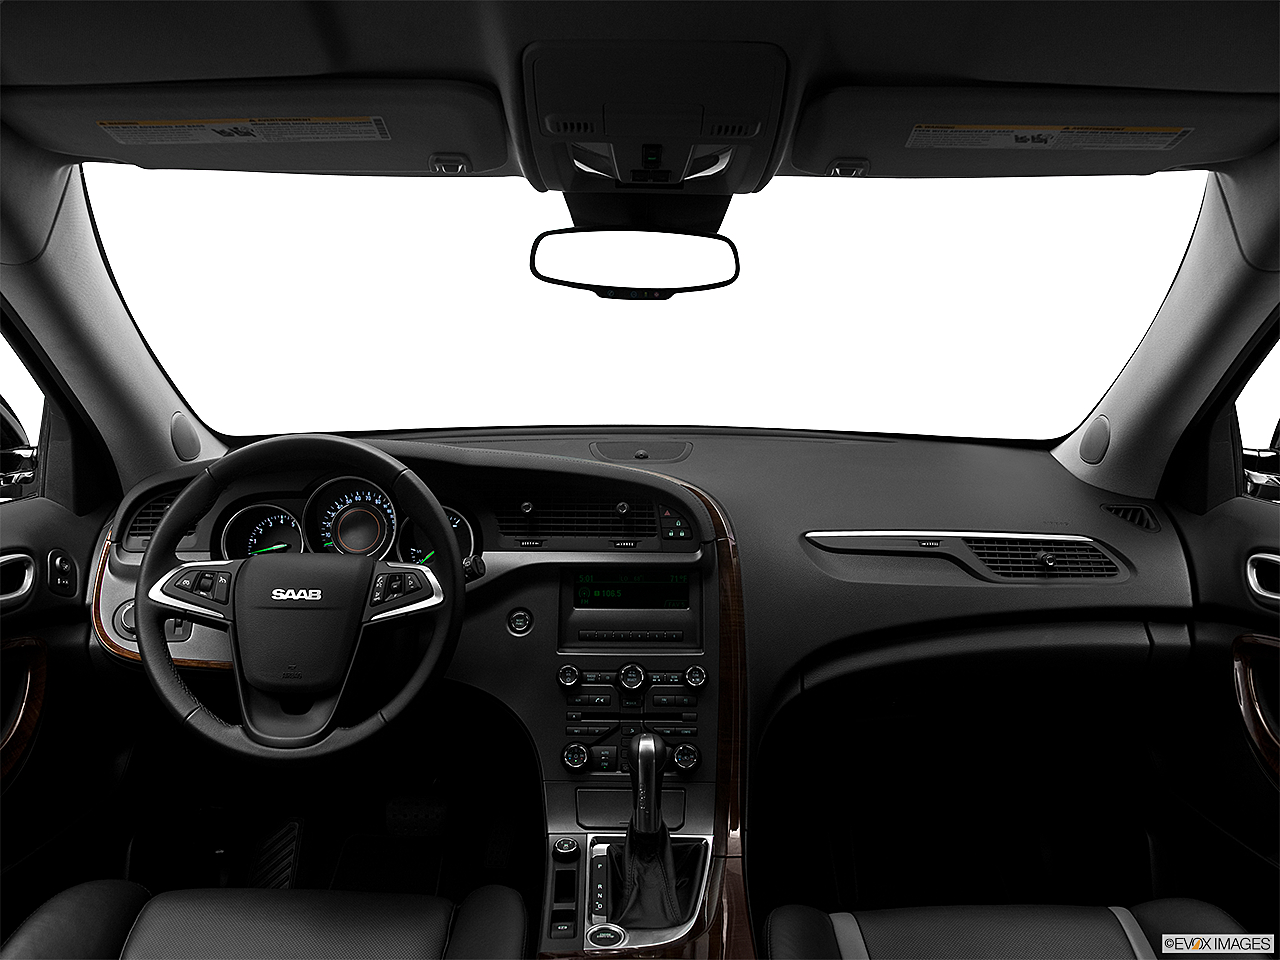 2011 Saab 9-4X AWD 3.0i Premium 4dr SUV - Research - GrooveCar